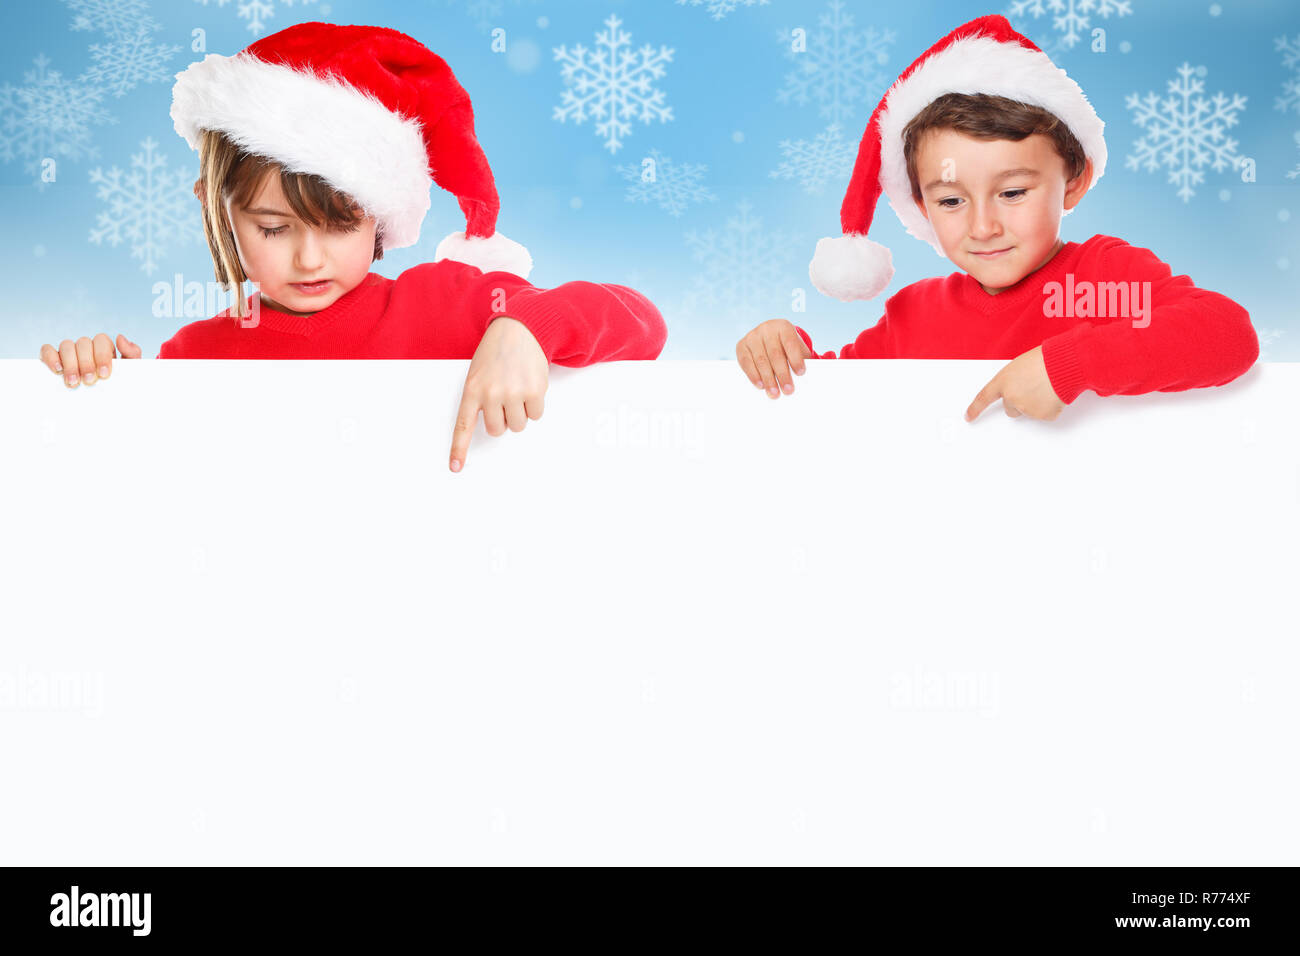 Natale Bambini bambini Babbo Natale di puntamento banner vuoto neve nevica copyspace Foto Stock